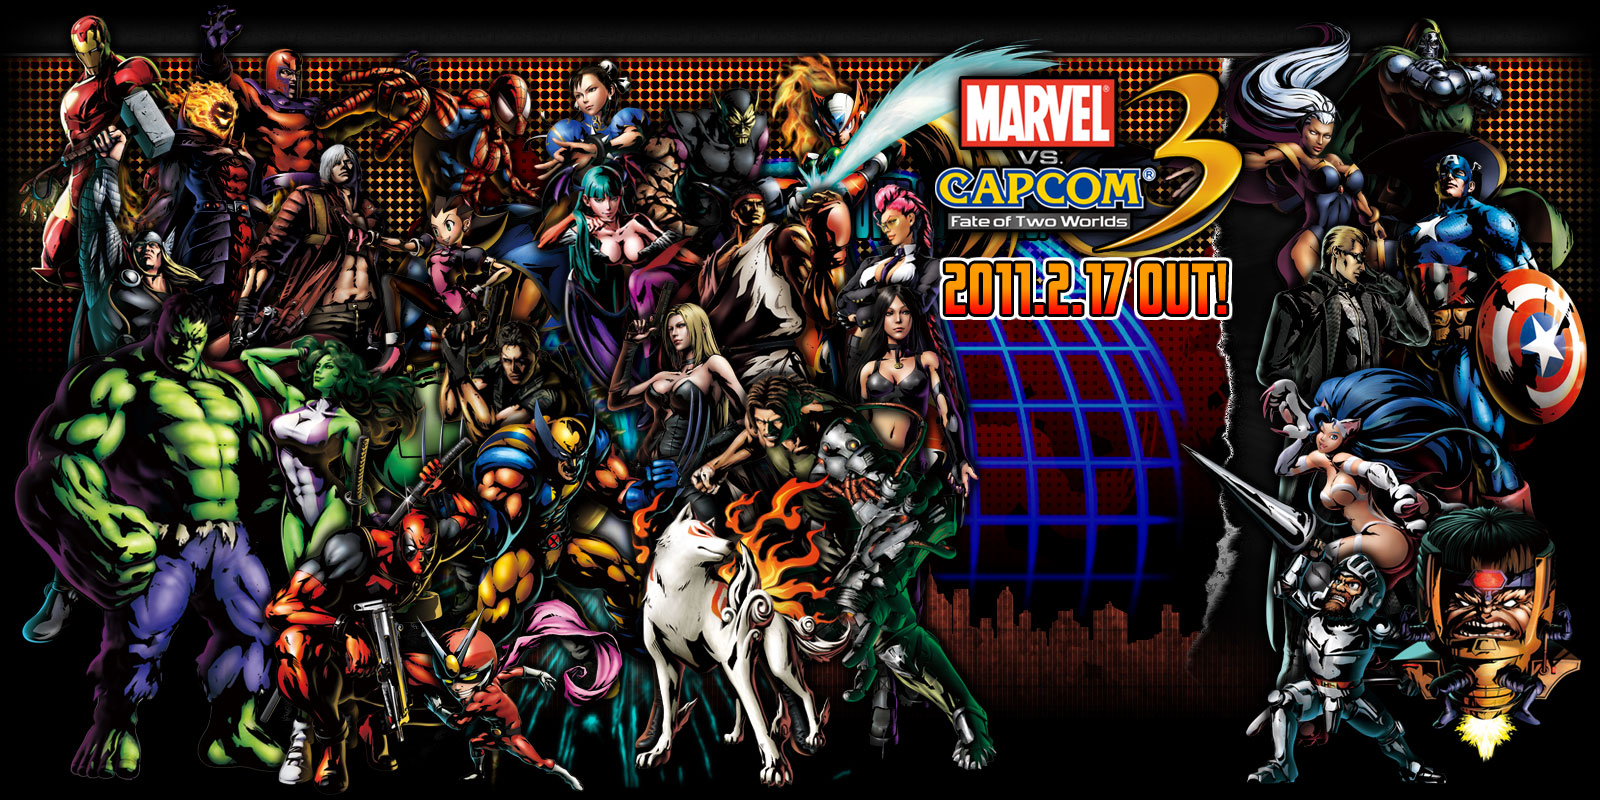 High Resolution Wallpaper | Marvel Vs. Capcom 3 1600x800 px